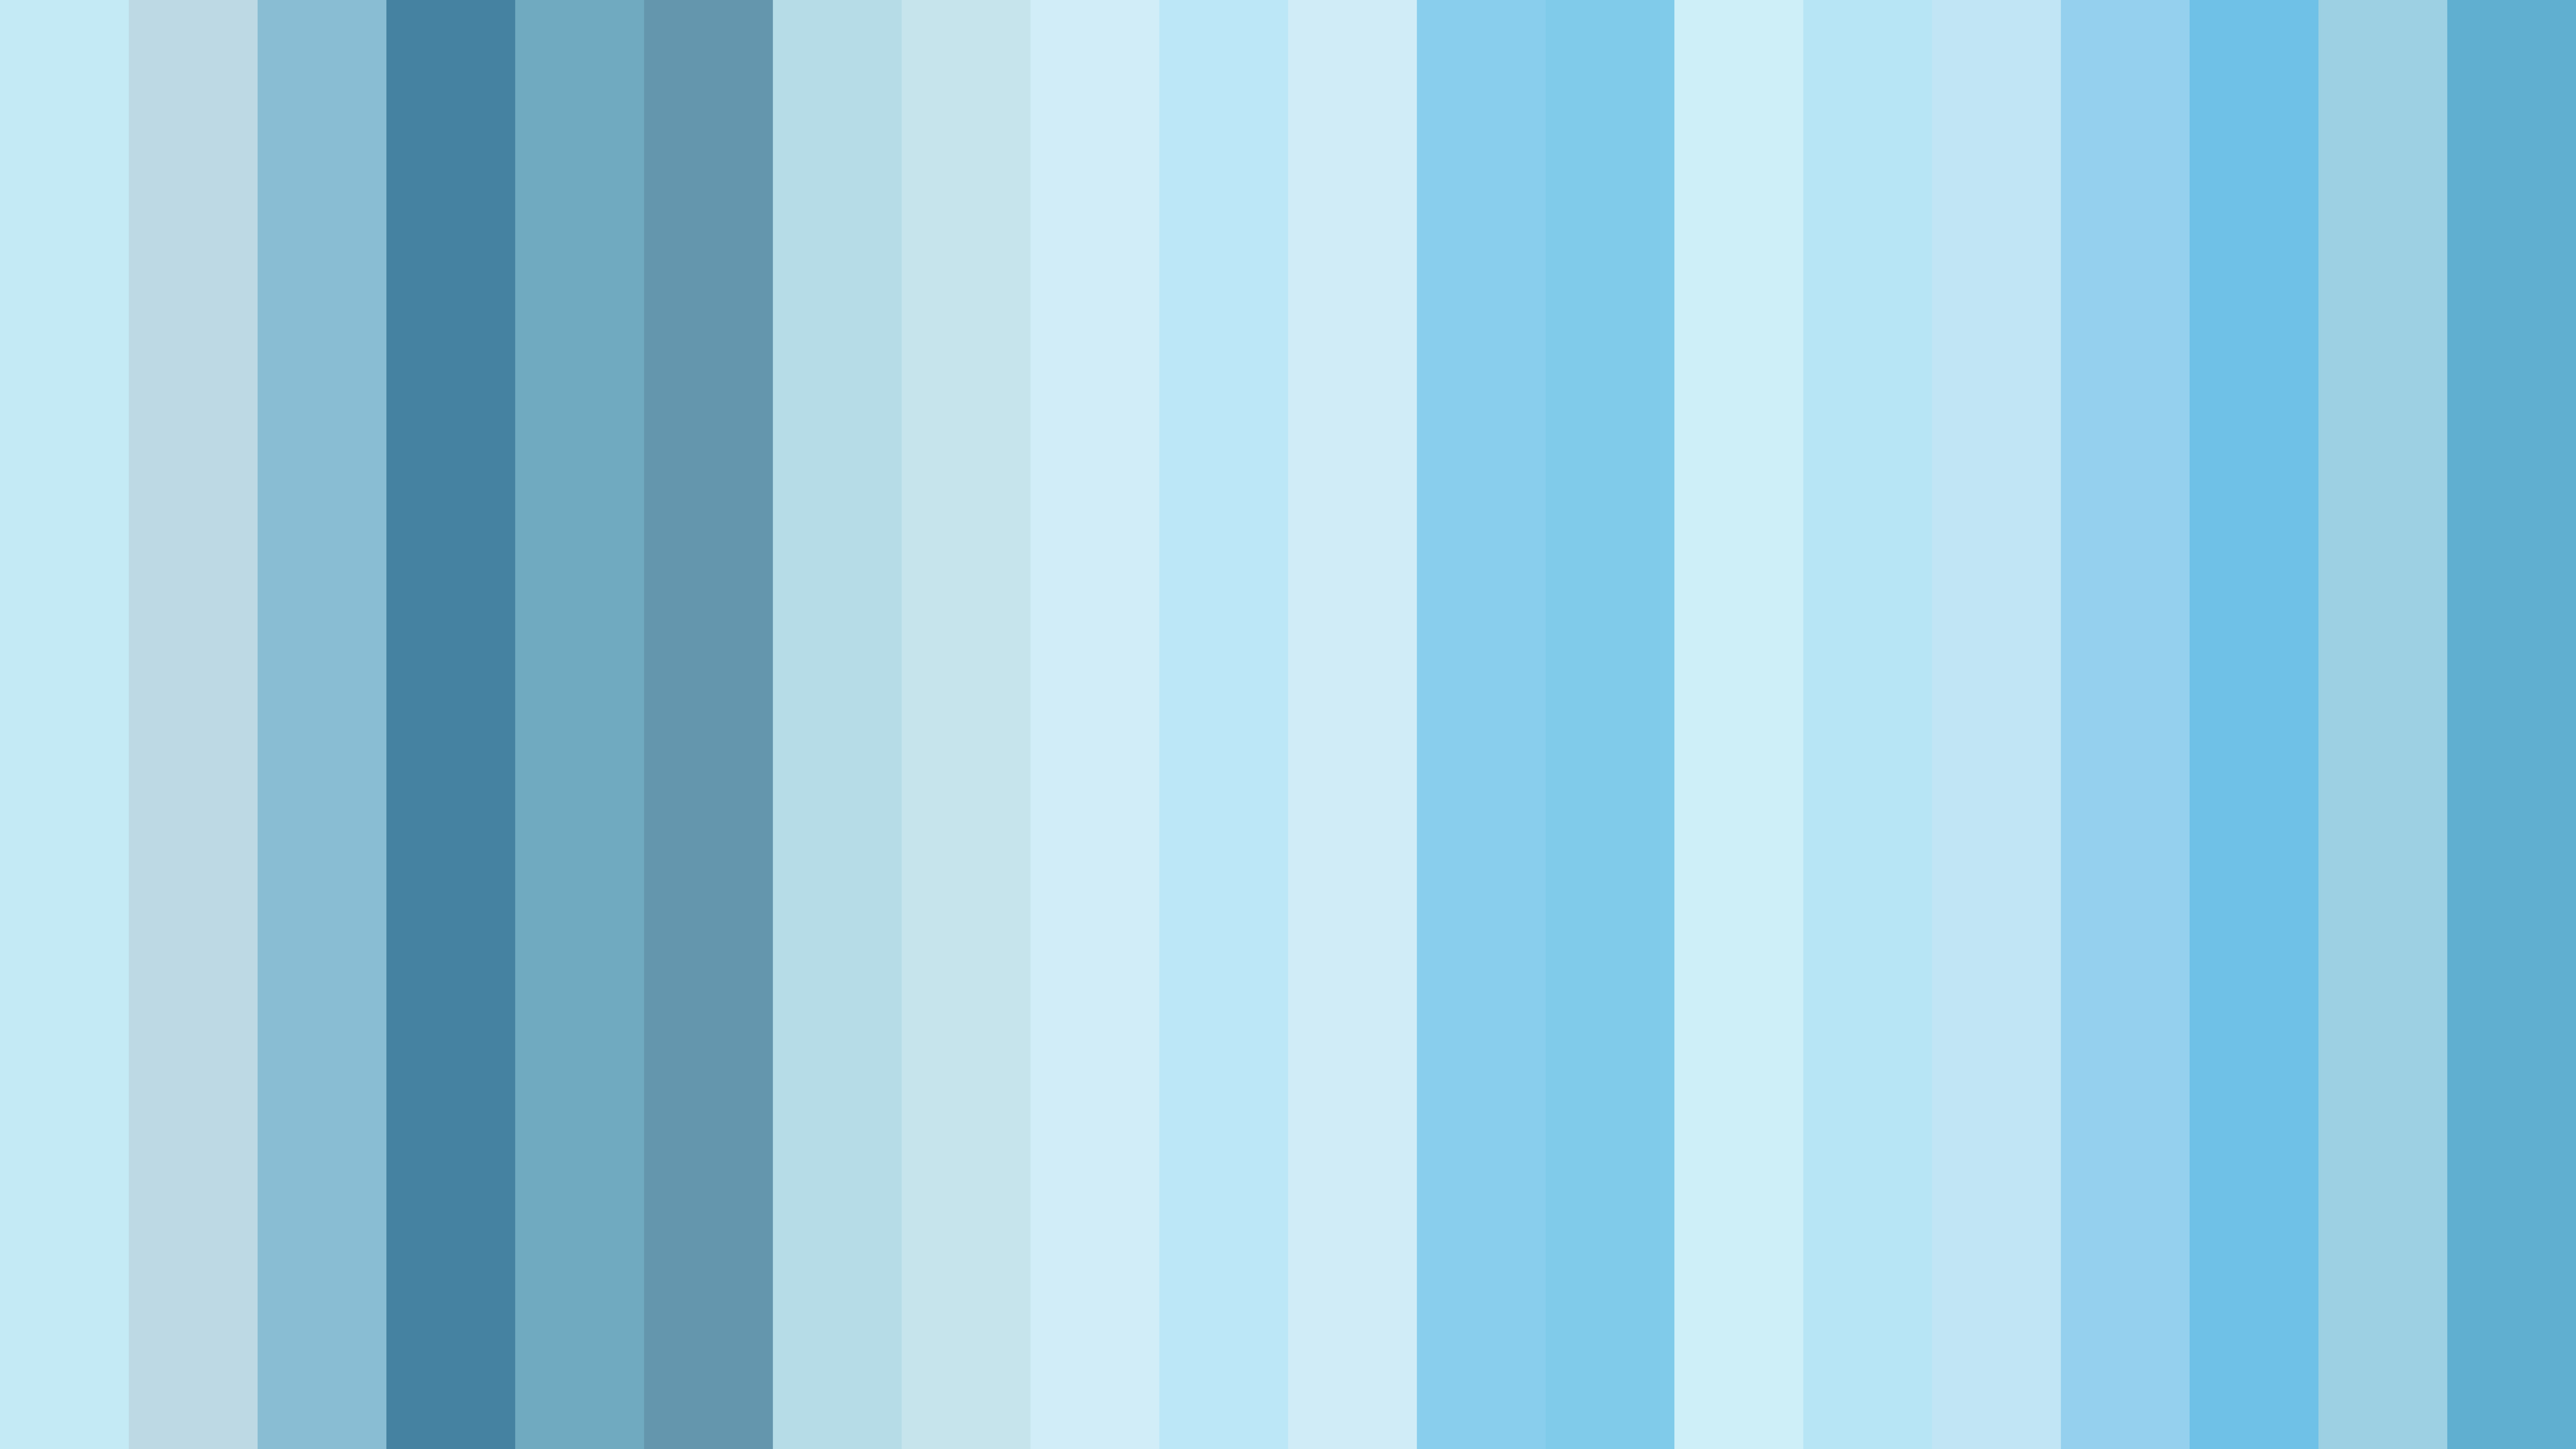 https://files.123freevectors.com/wp-content/original/113994-light-blue-striped-background-vector.jpg